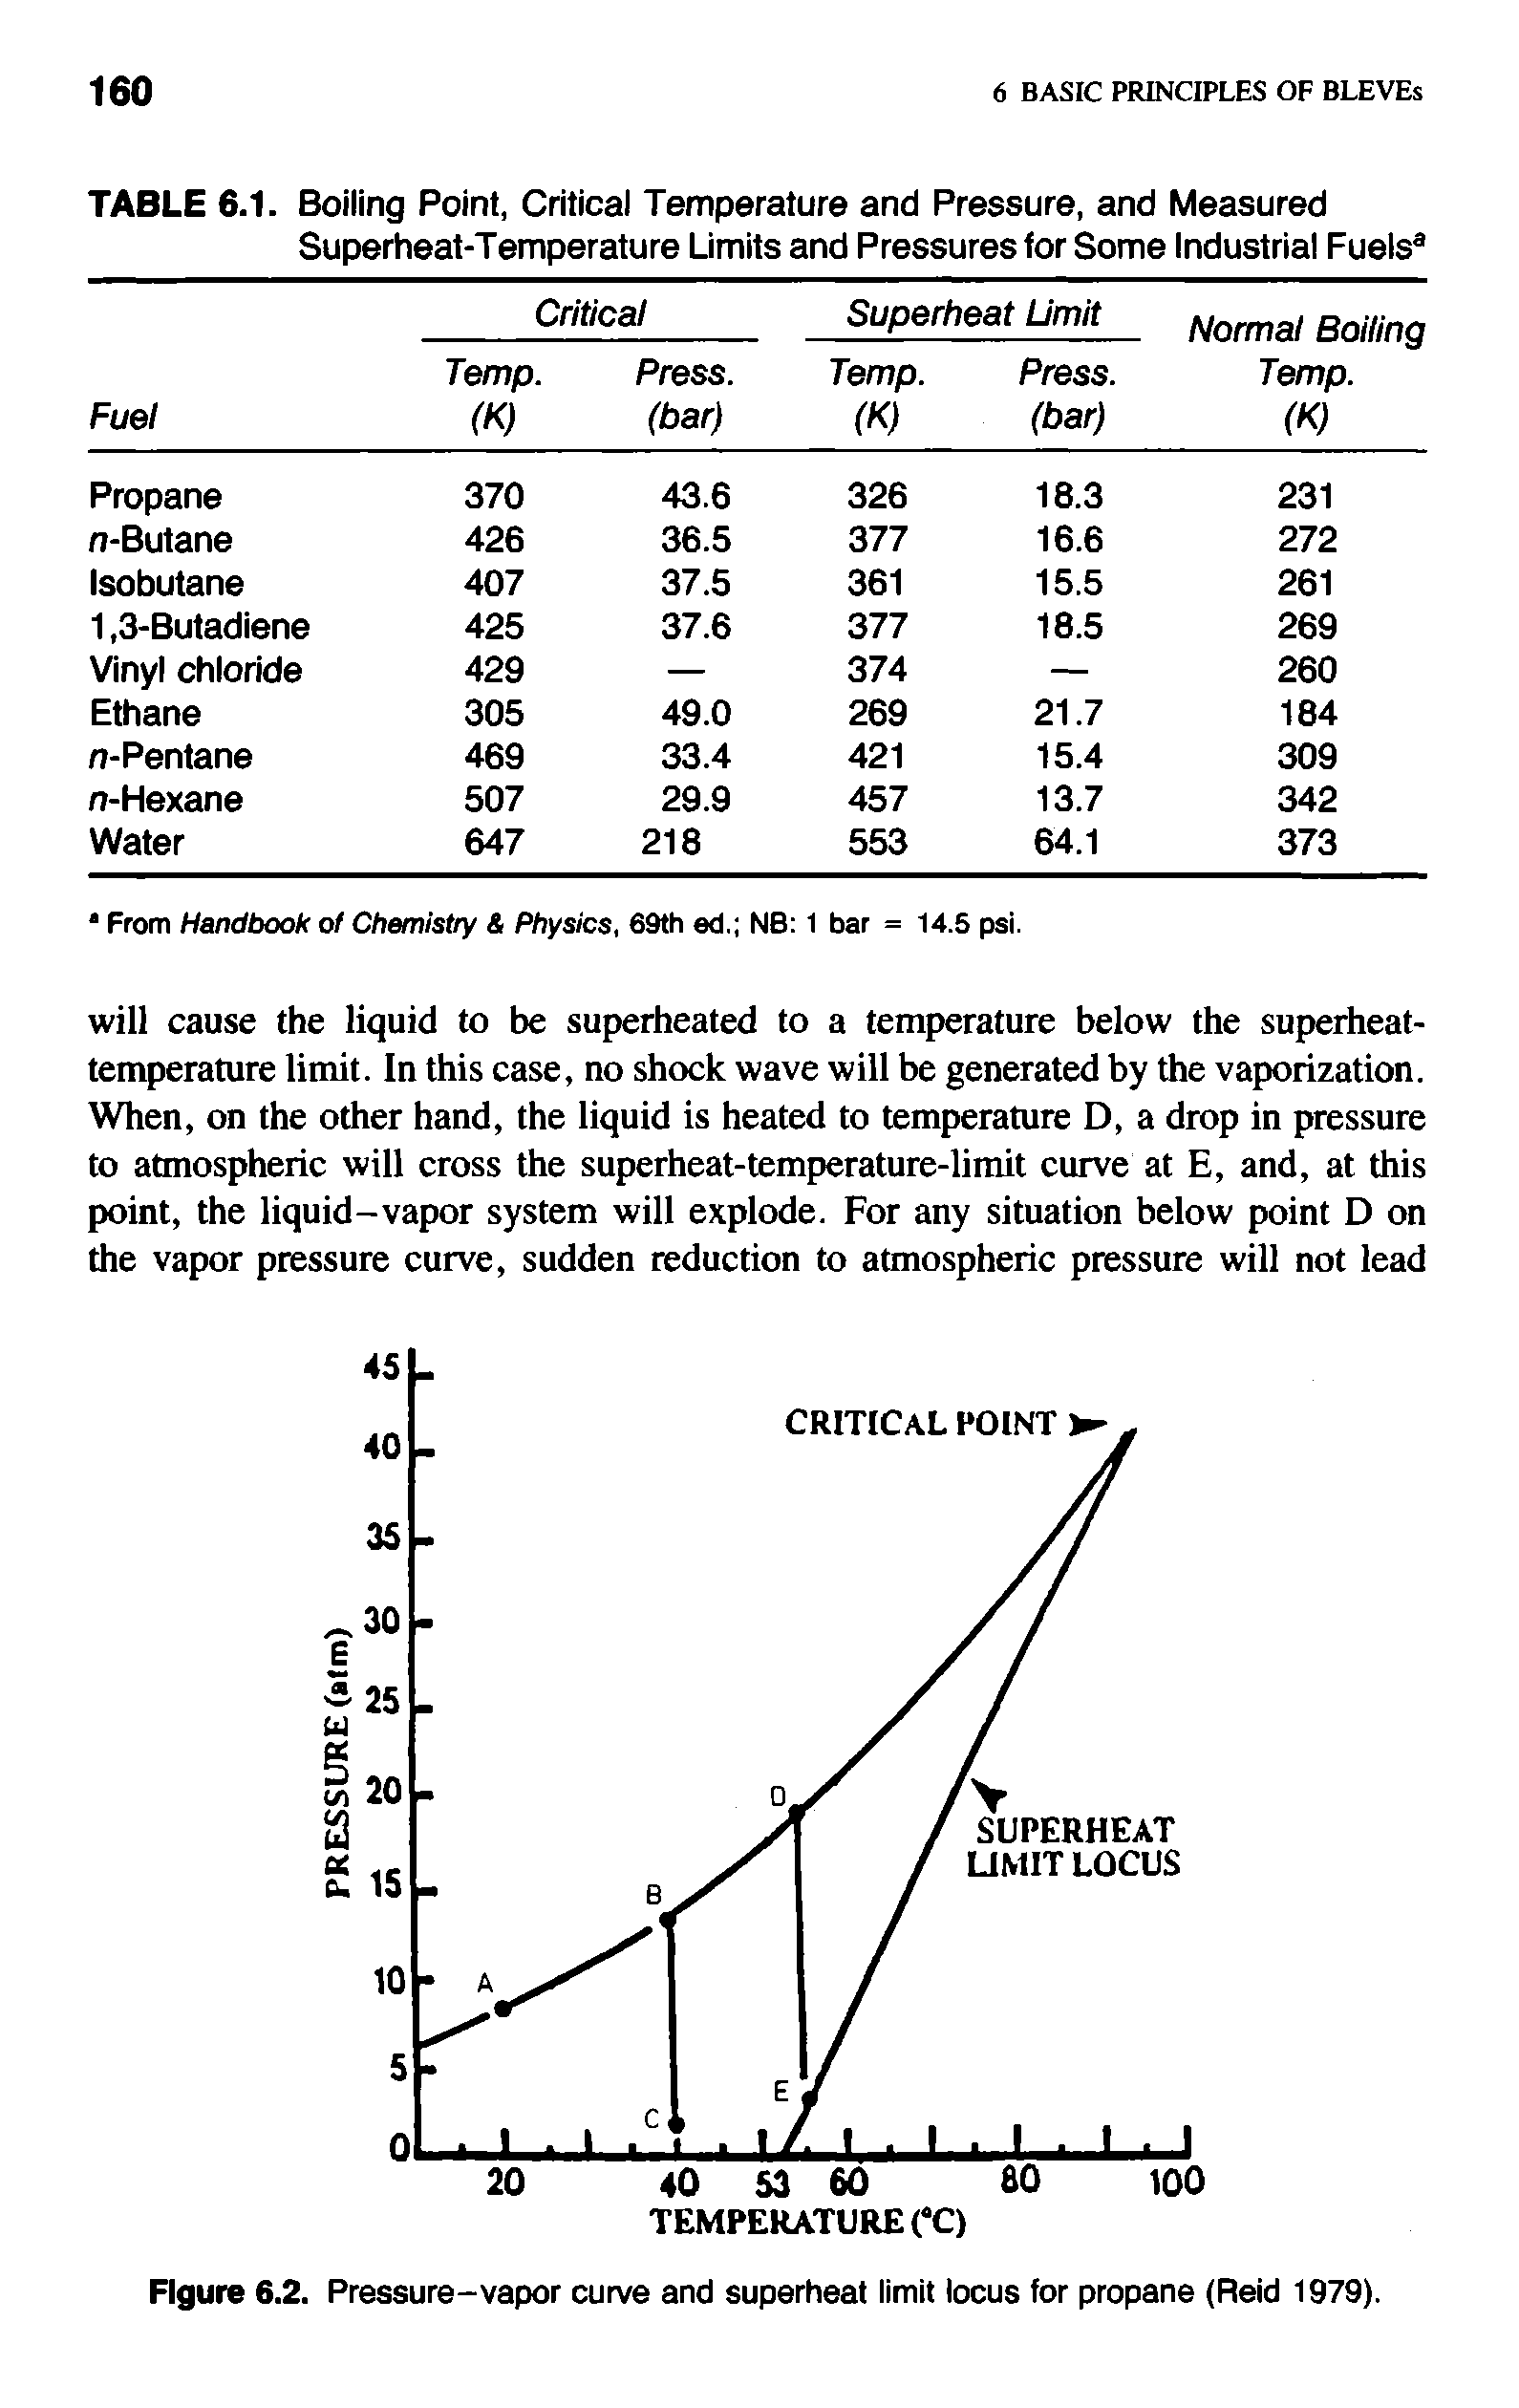 Figure 6.2. Pressure-vapor curve and superheat limit locus for propane (Reid 1979).